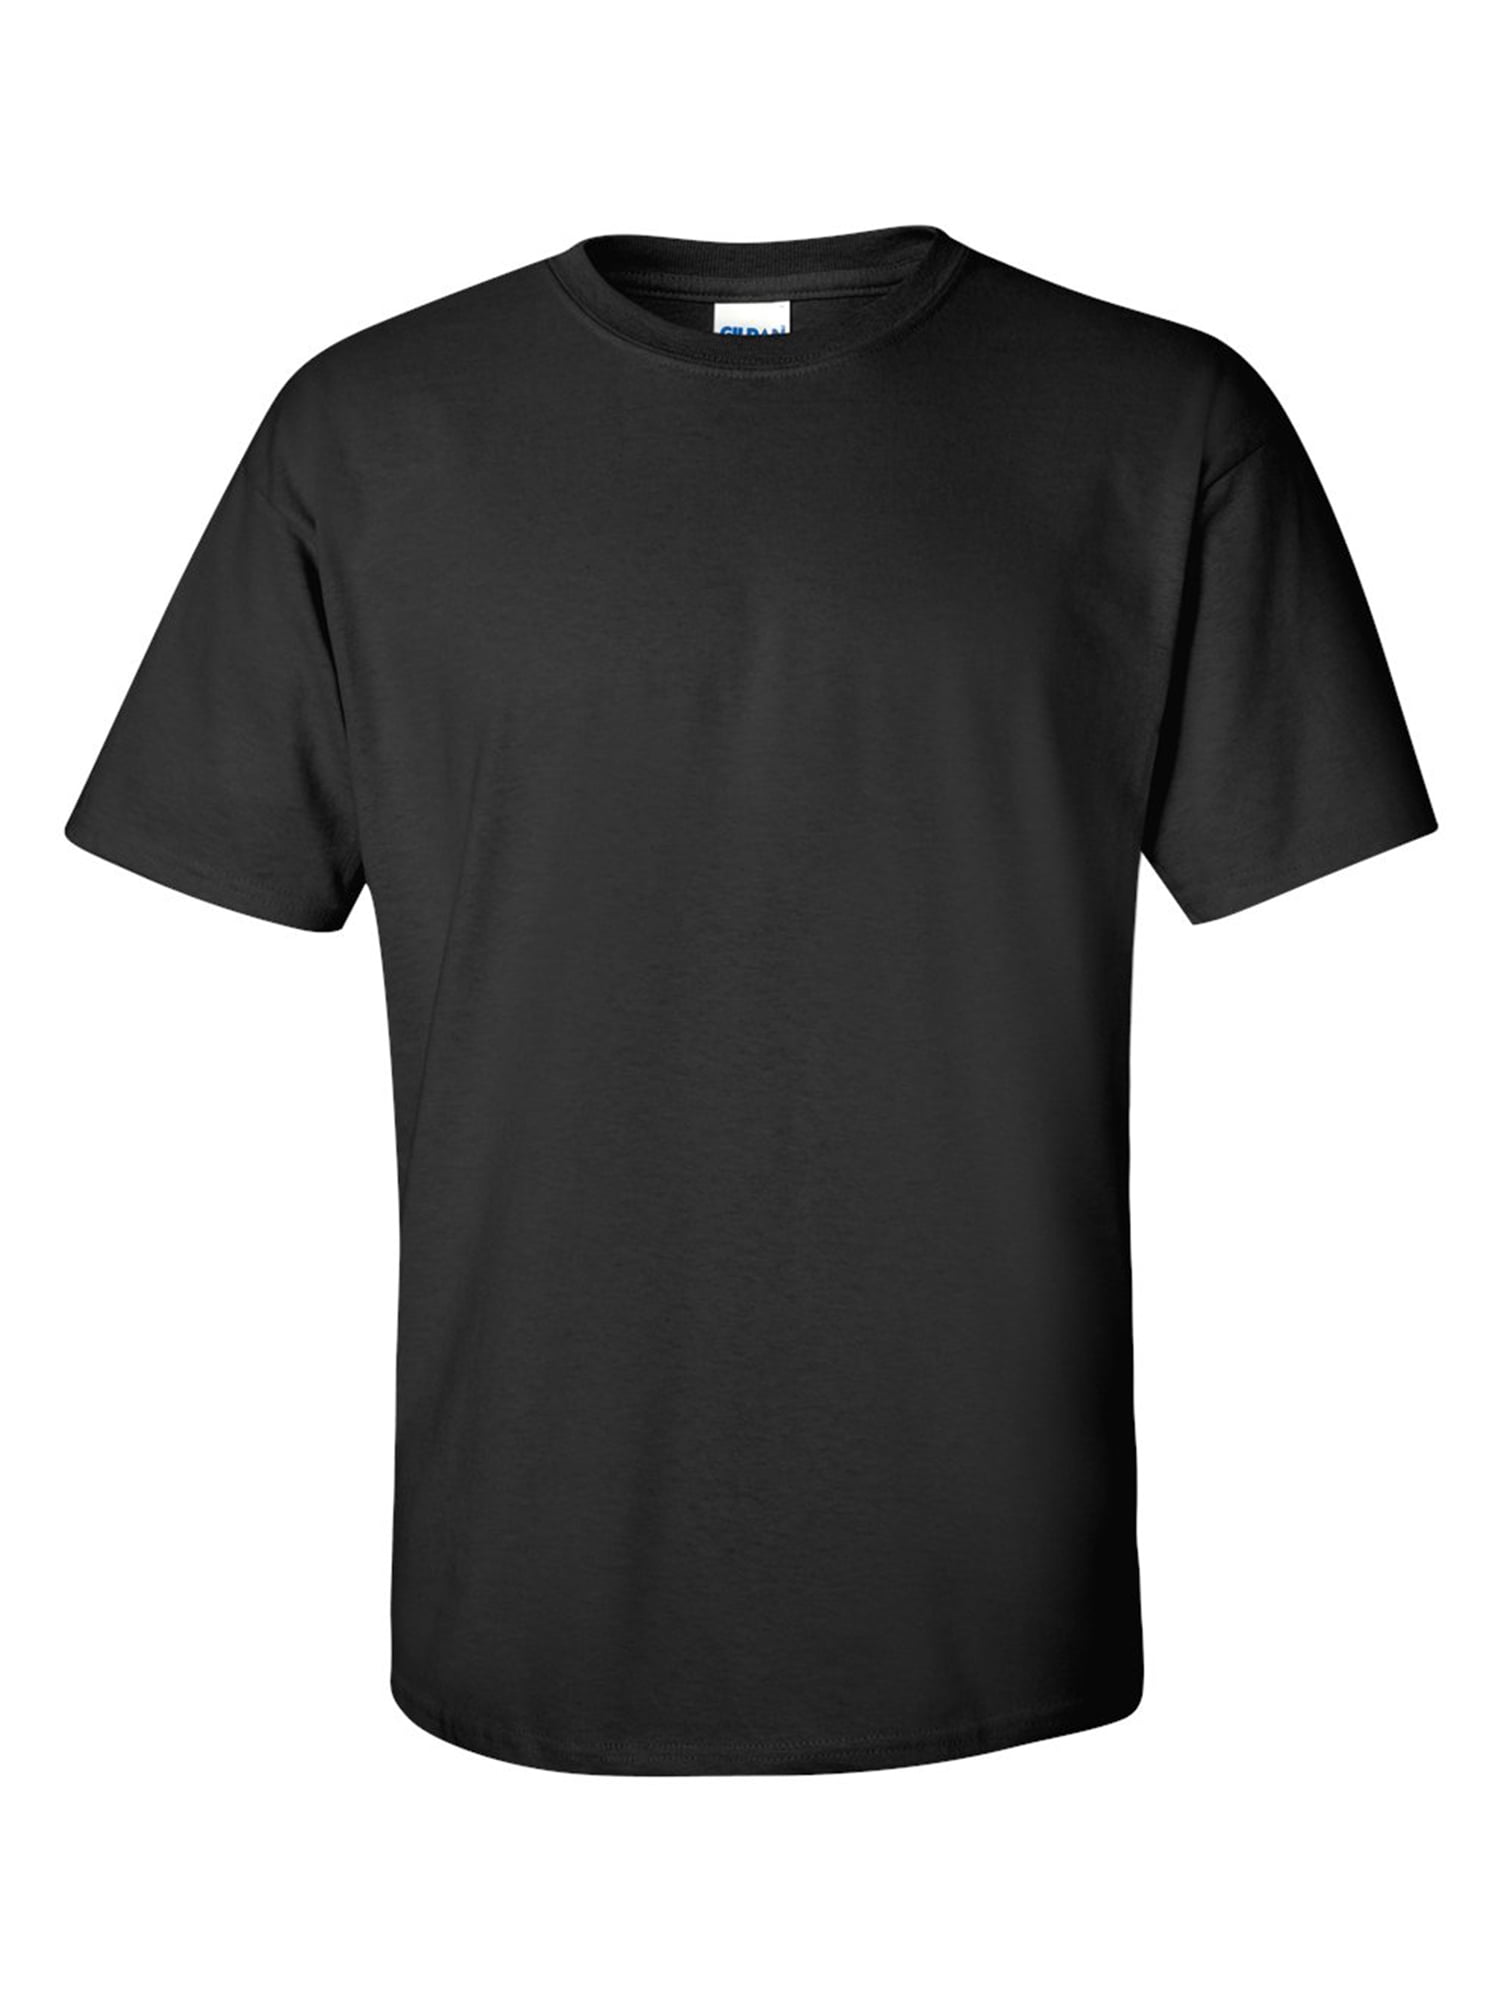 Gildan Short Sleeve V Neck T Shirt Size Chart